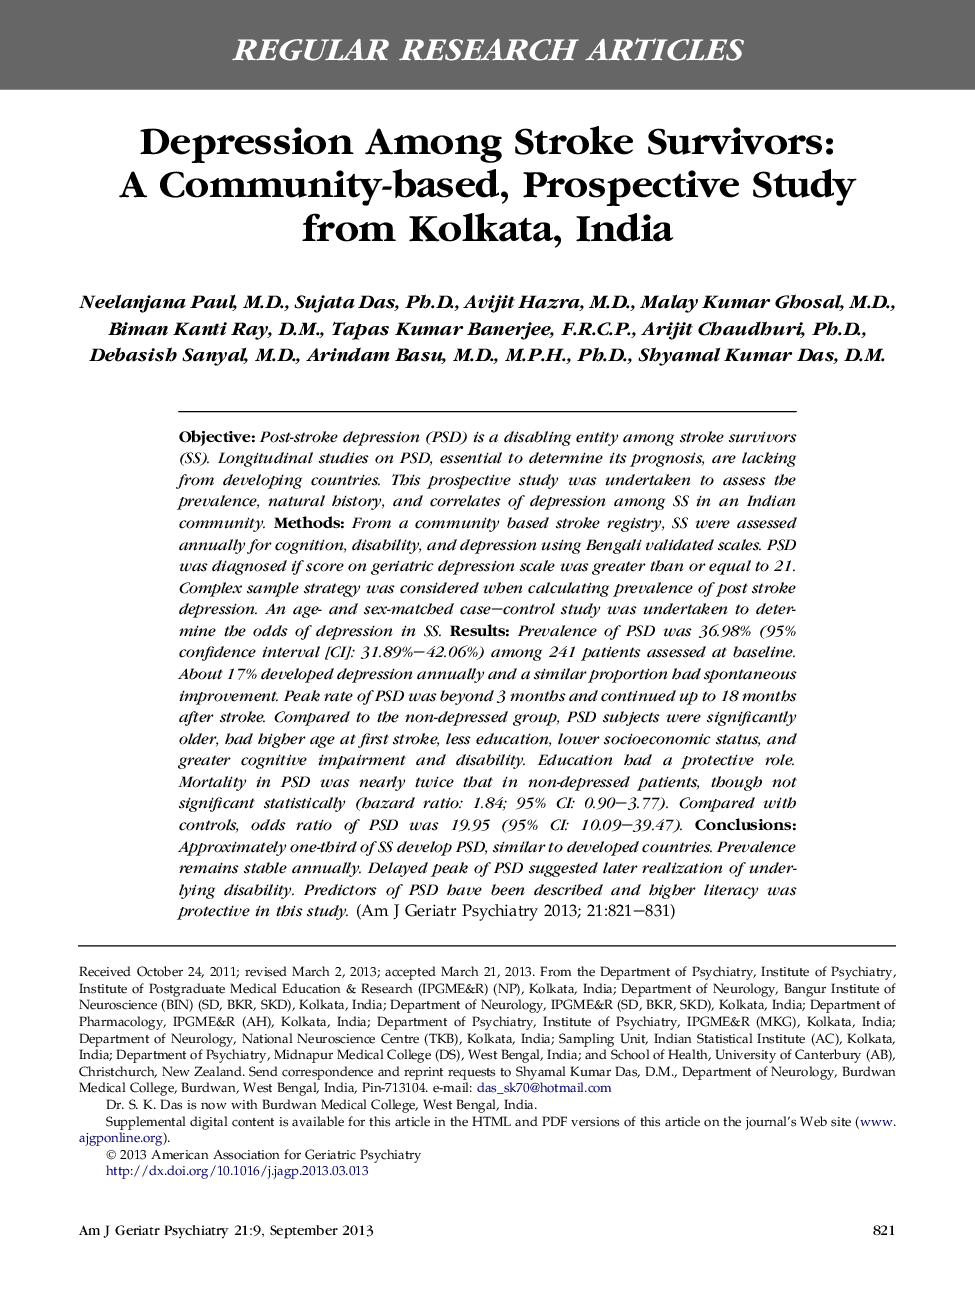 Depression Among Stroke Survivors: A Community-based, Prospective Study from Kolkata, India